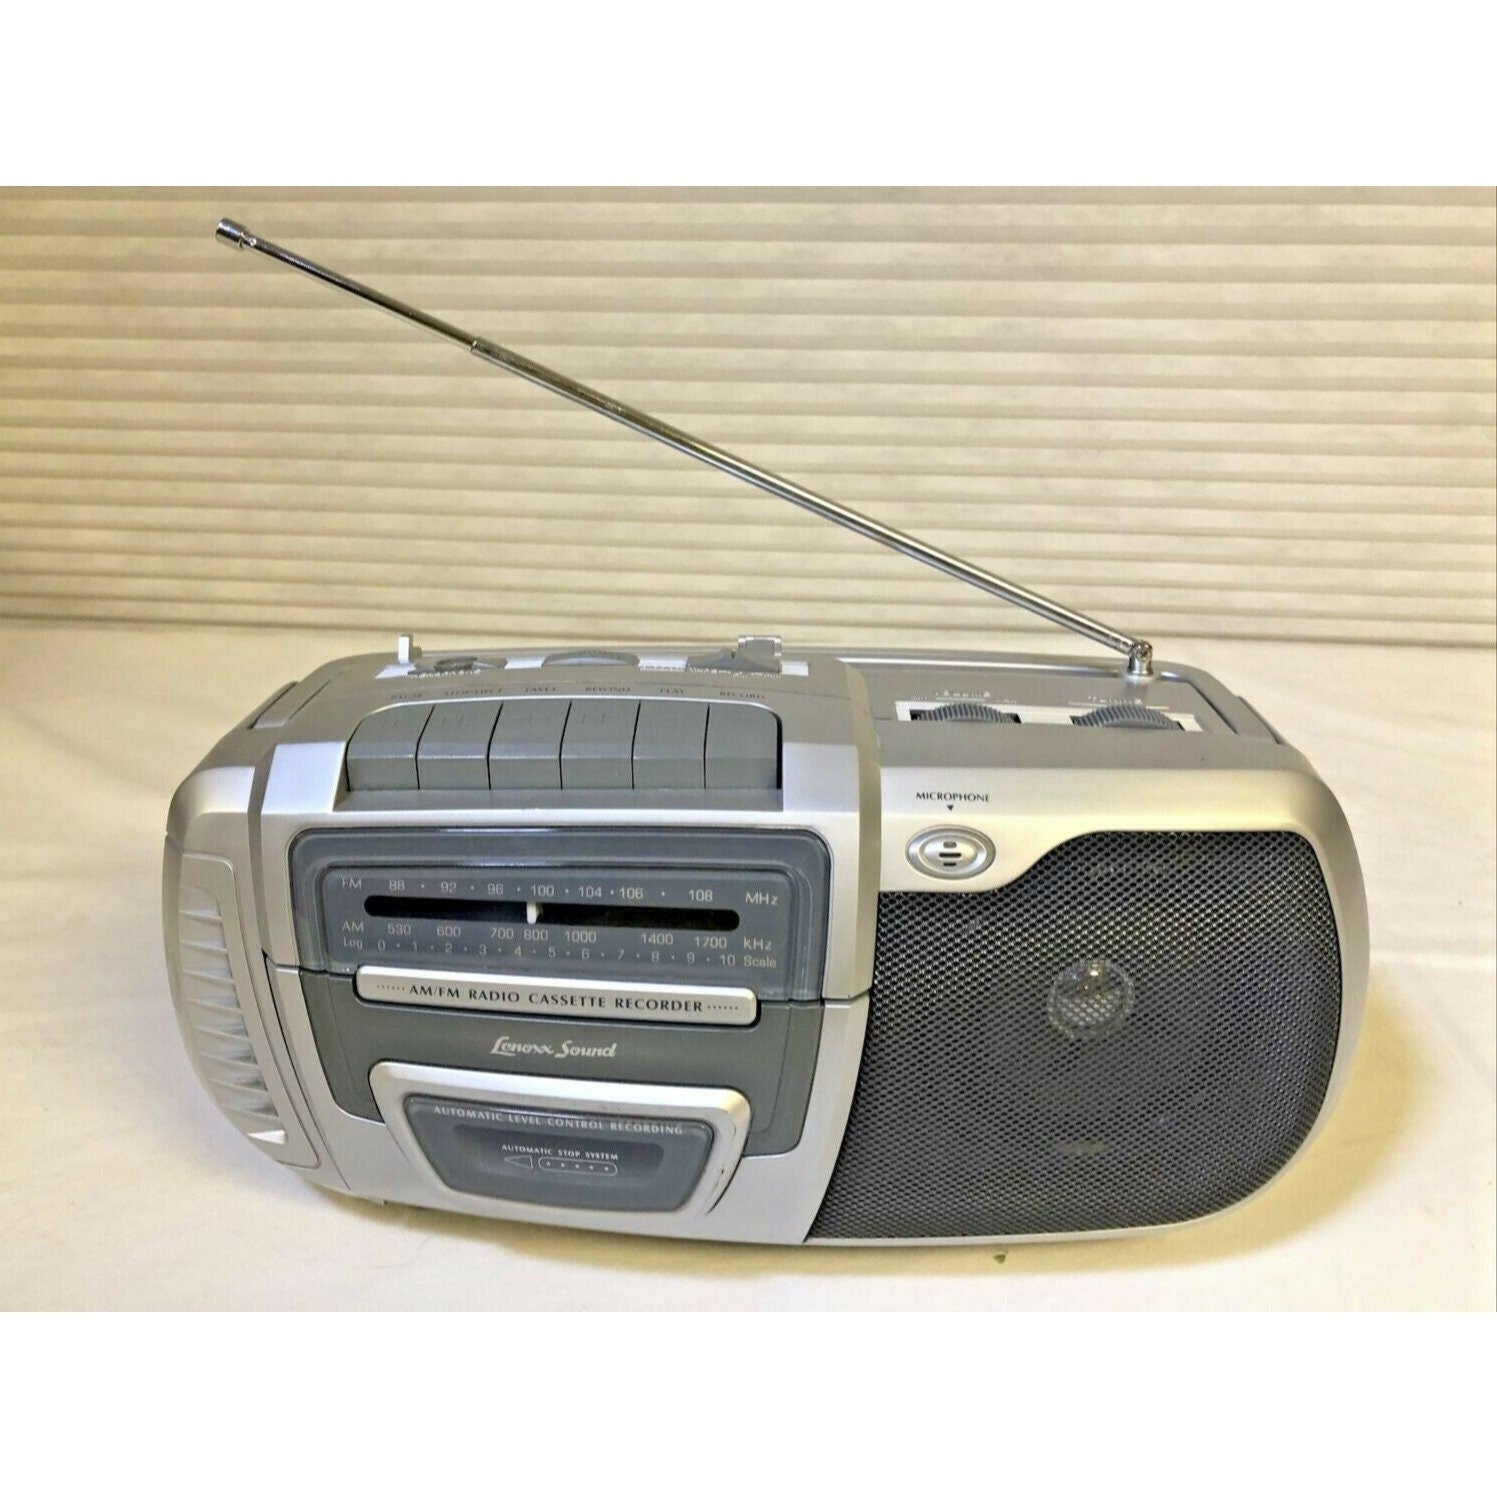 Lenoxx Sound CT-992 Radio Cassette Recorder